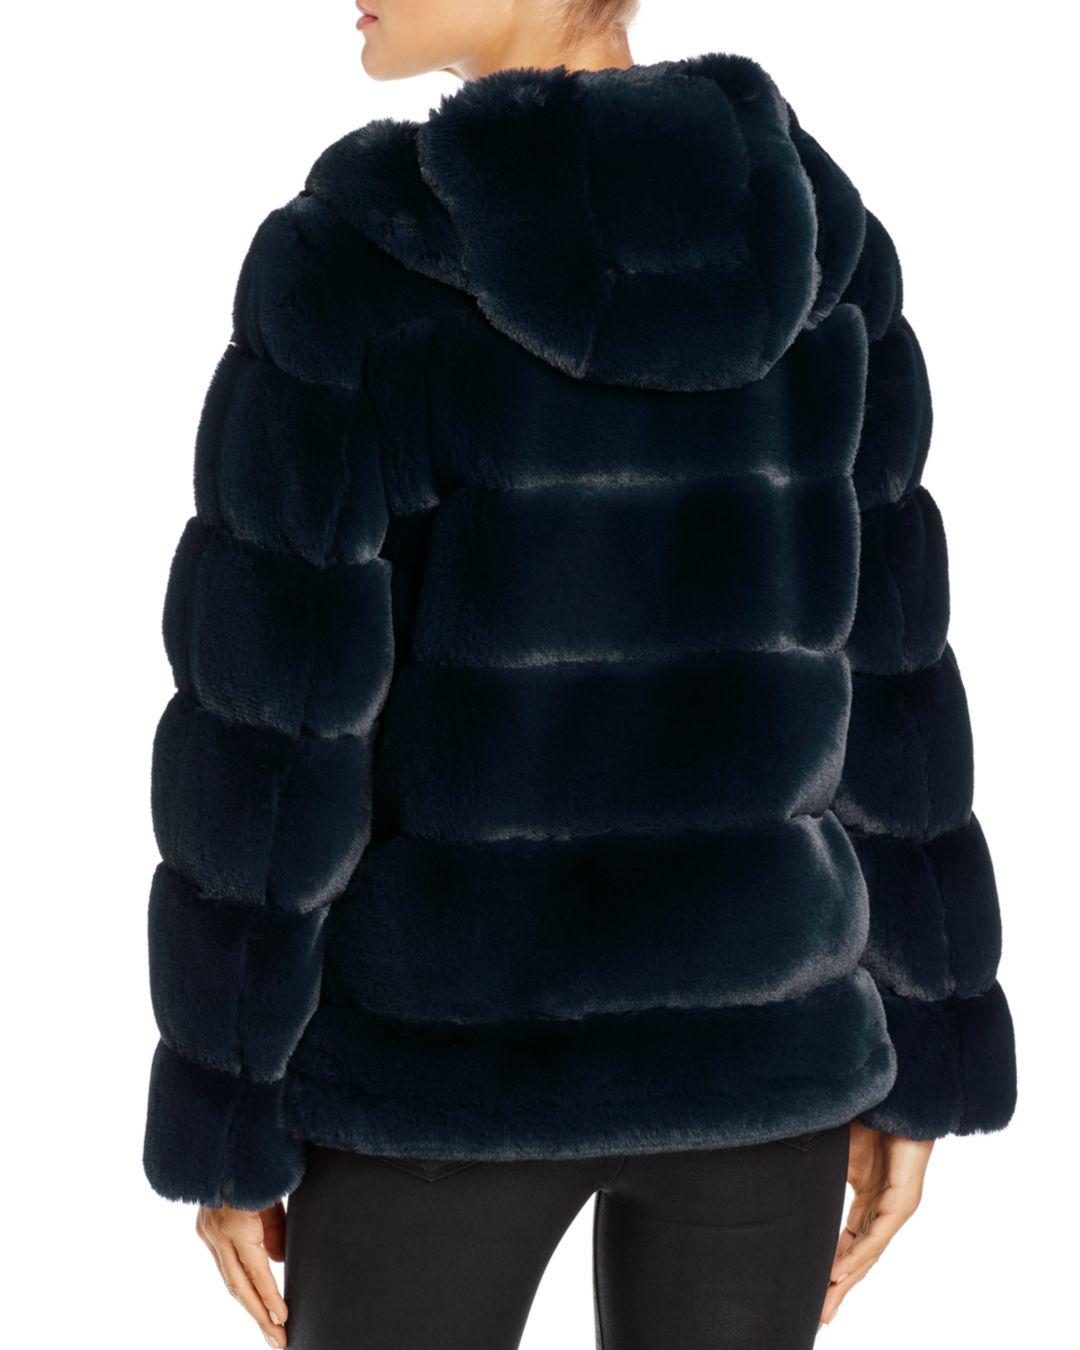 Via Spiga Reversible Hooded Faux Fur Jacket in Navy (Blue) - Lyst